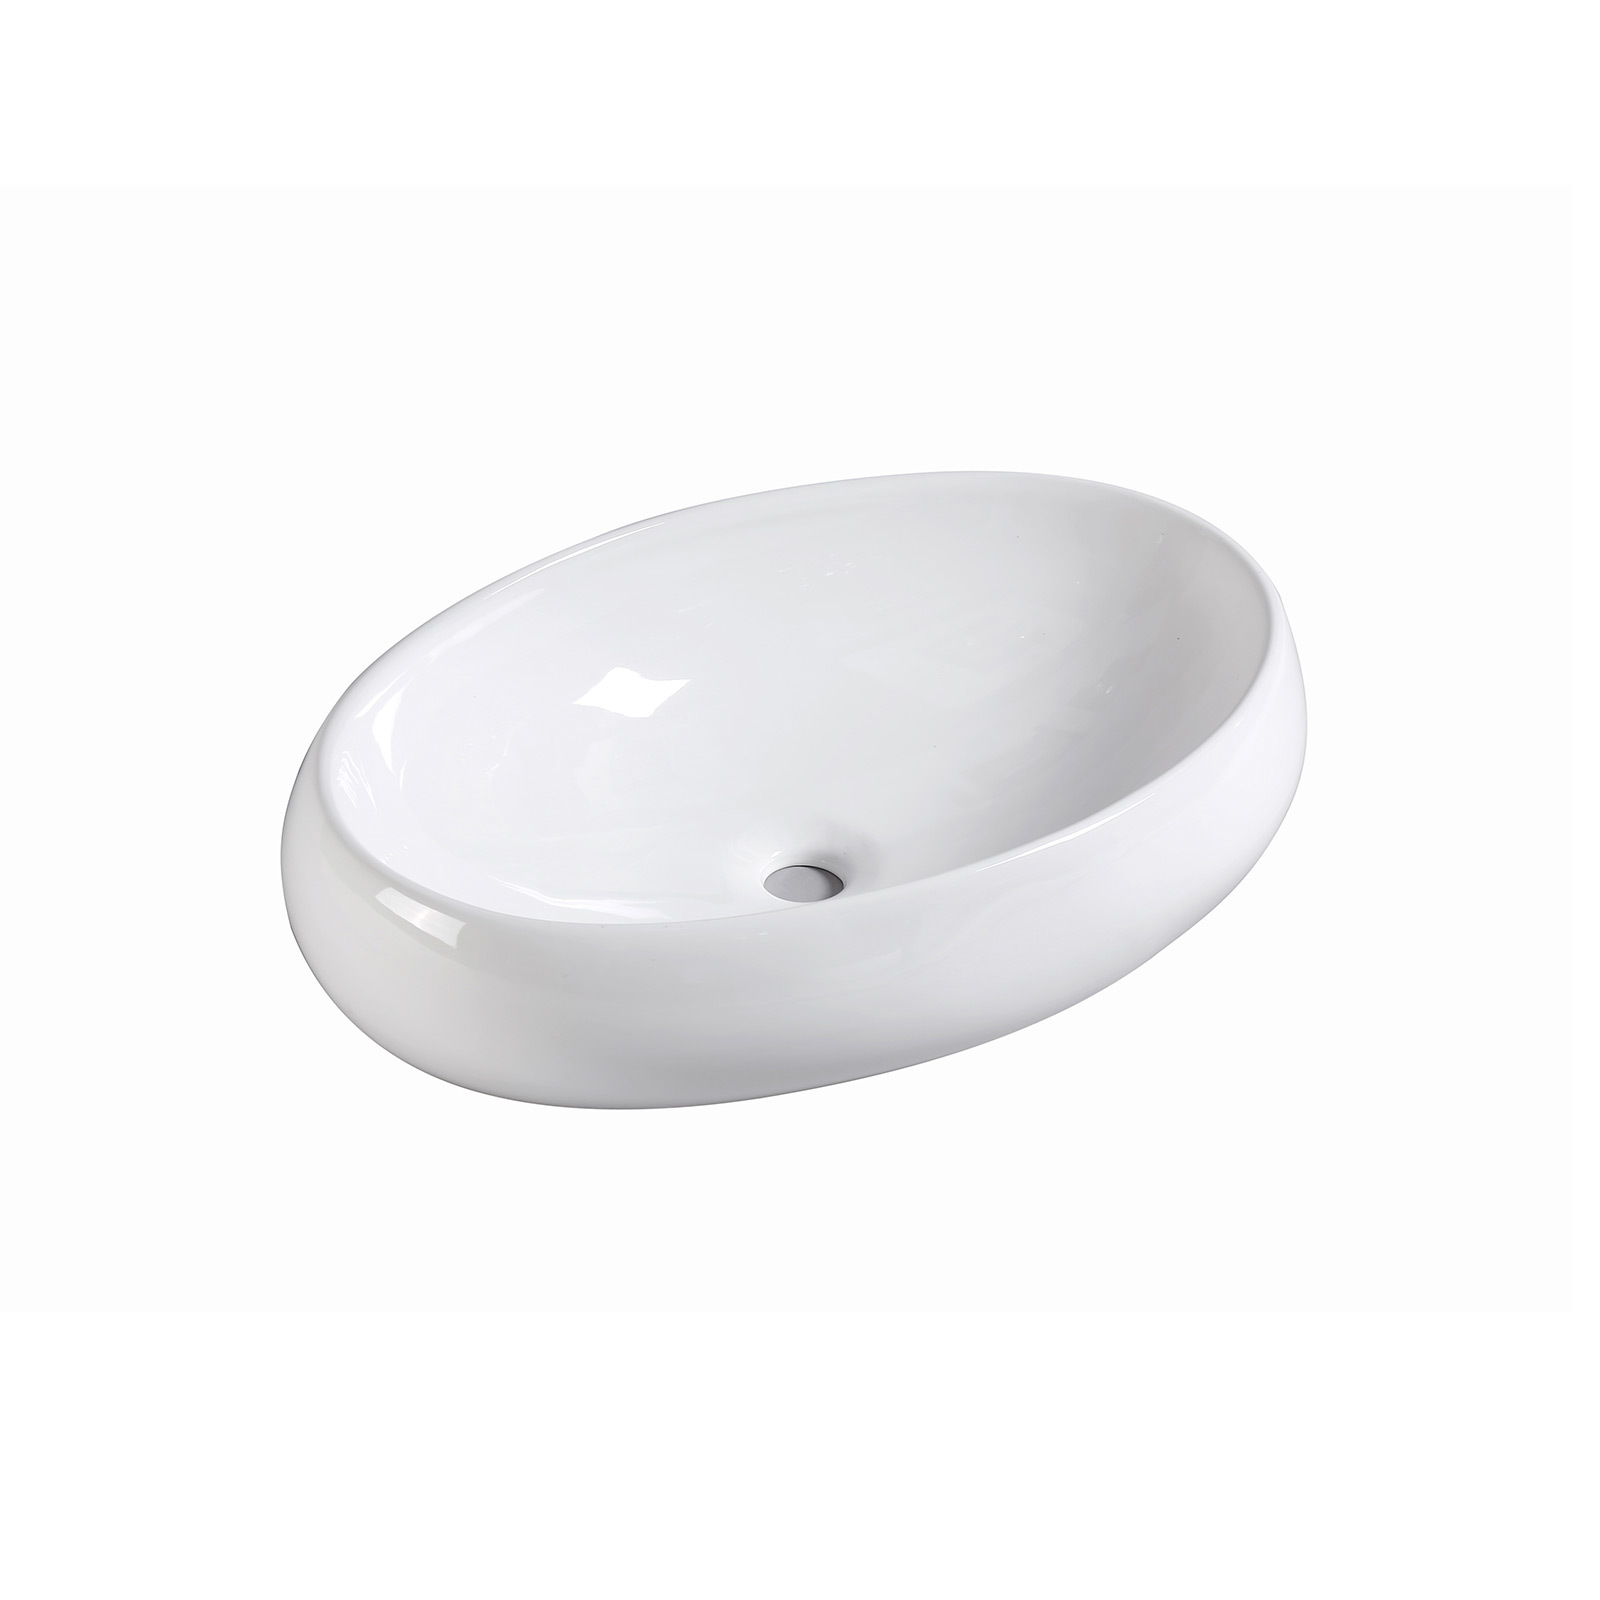 40 x 30 x 13cm Ceramic Bathroom Basin Oval - WHITE